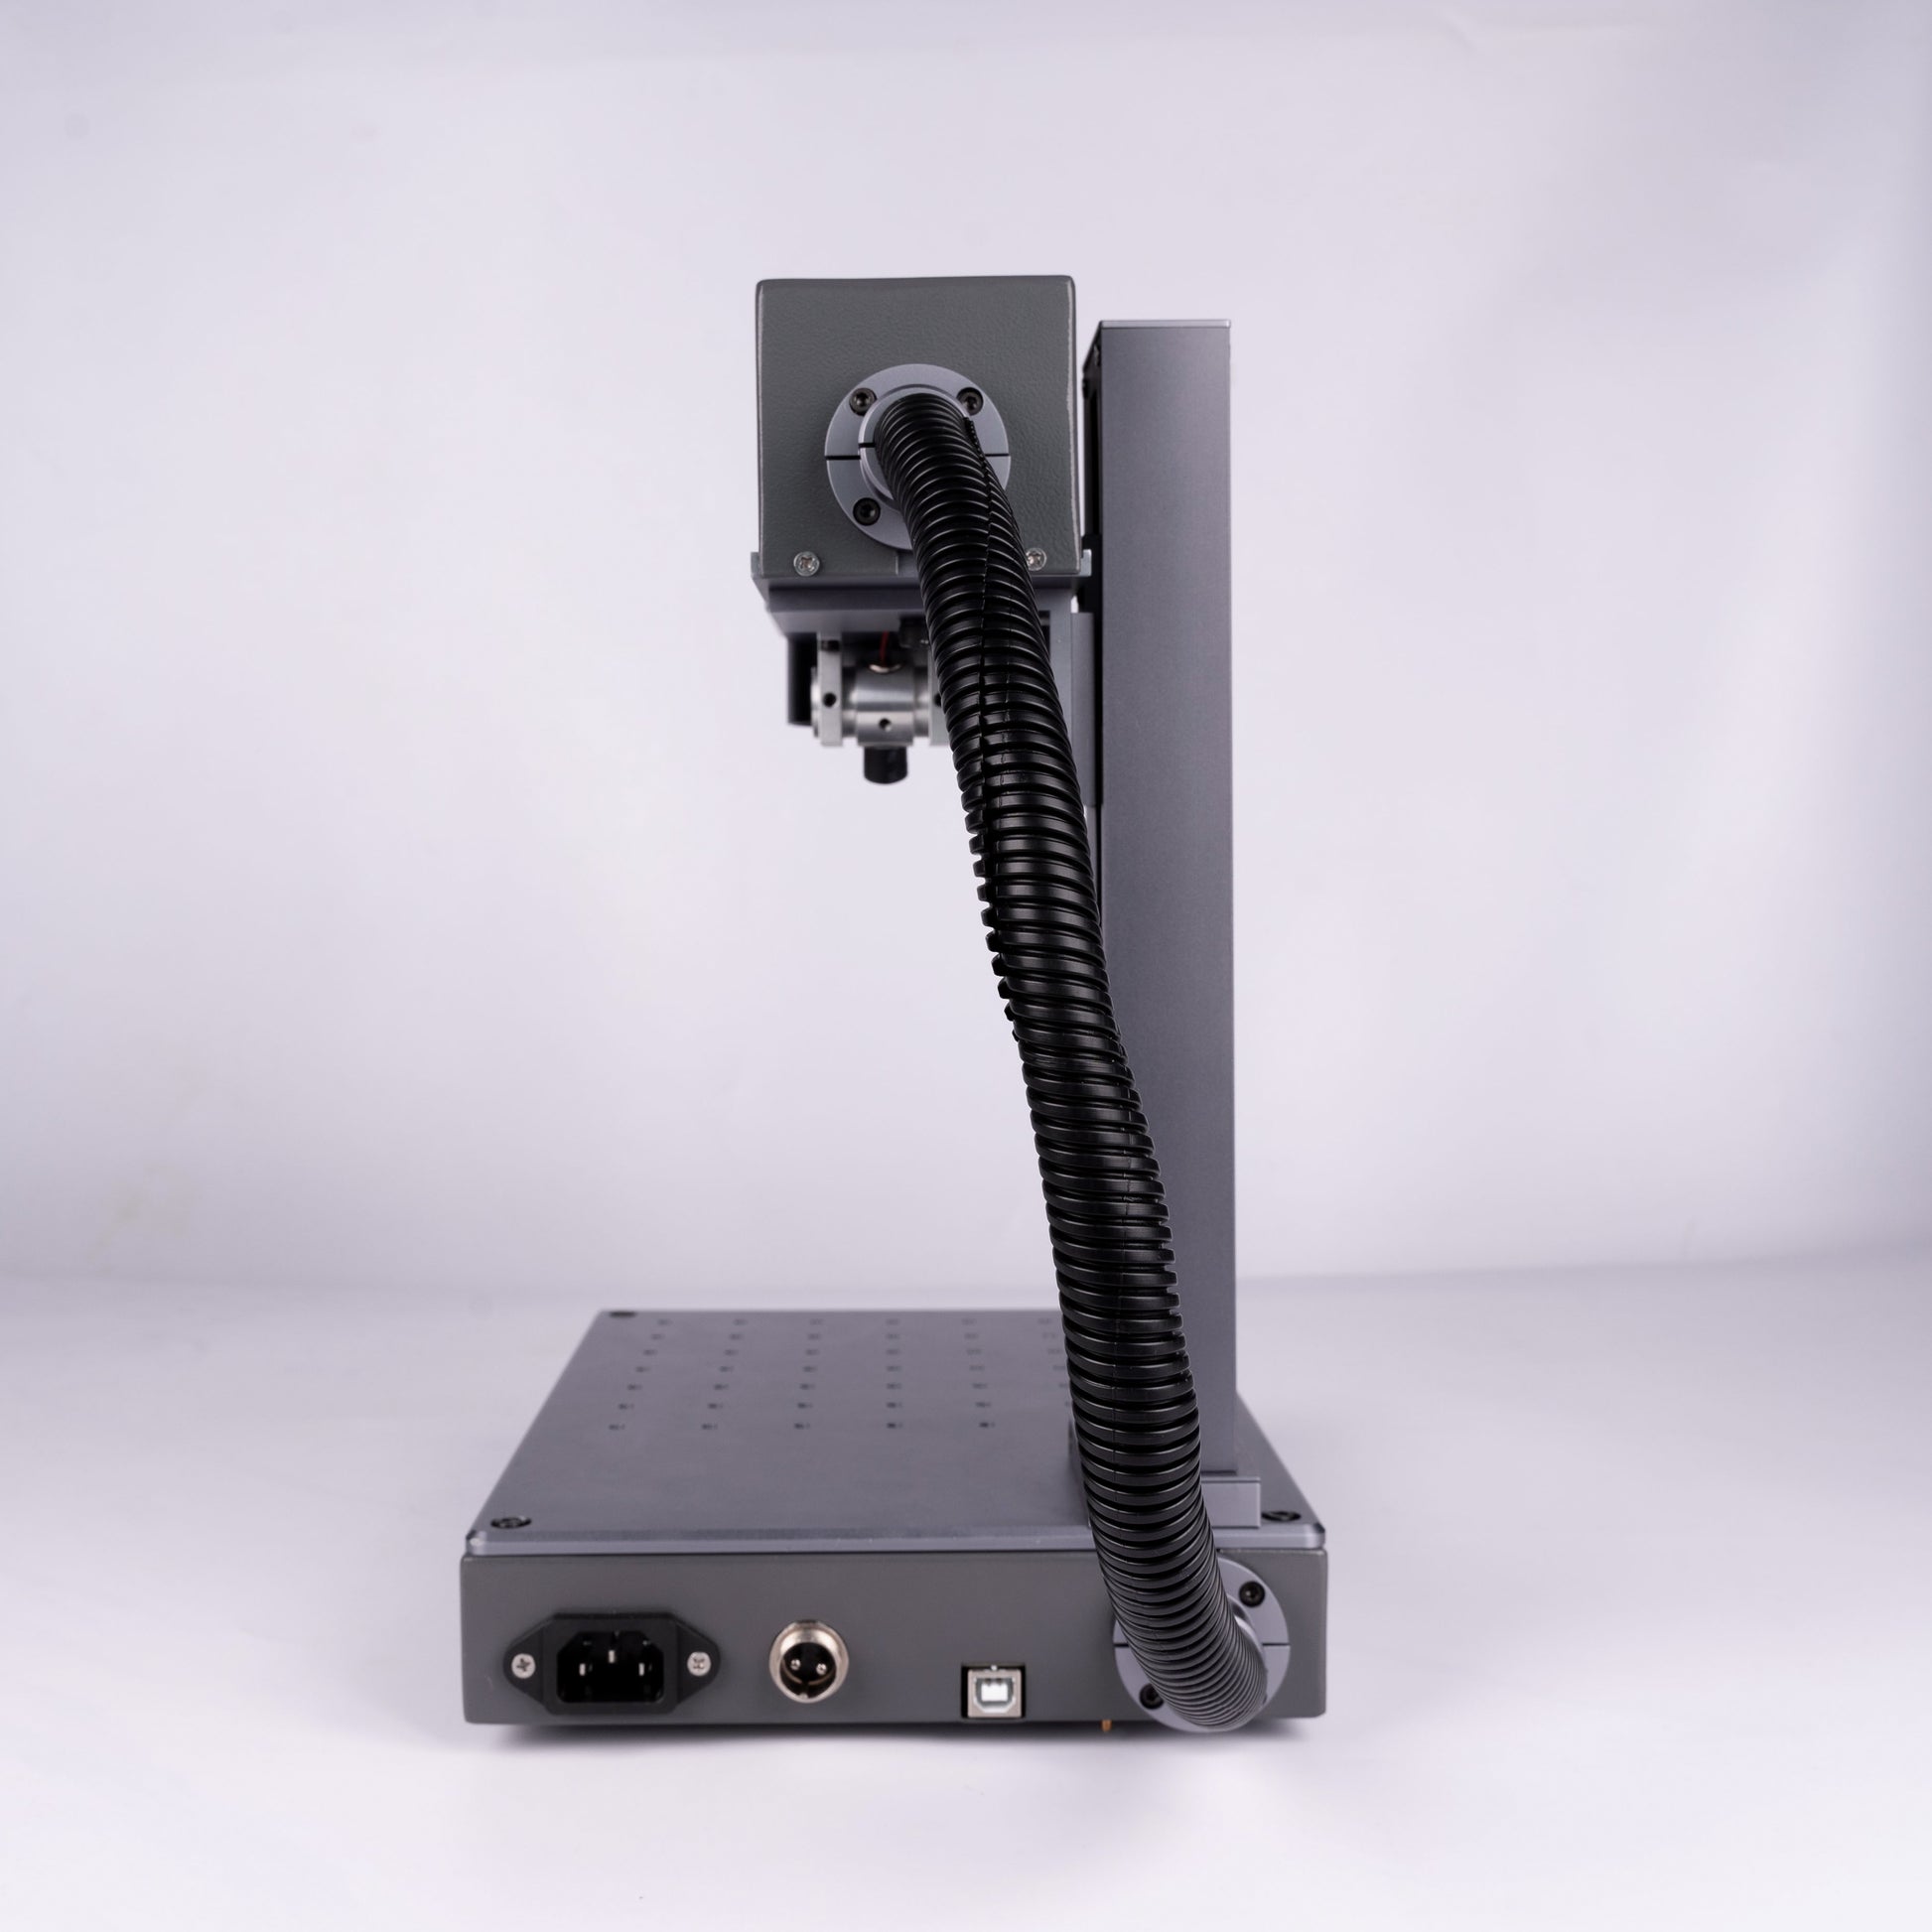  FONLAND M1 Pro Fiber Laser Marking Machine with Rotary